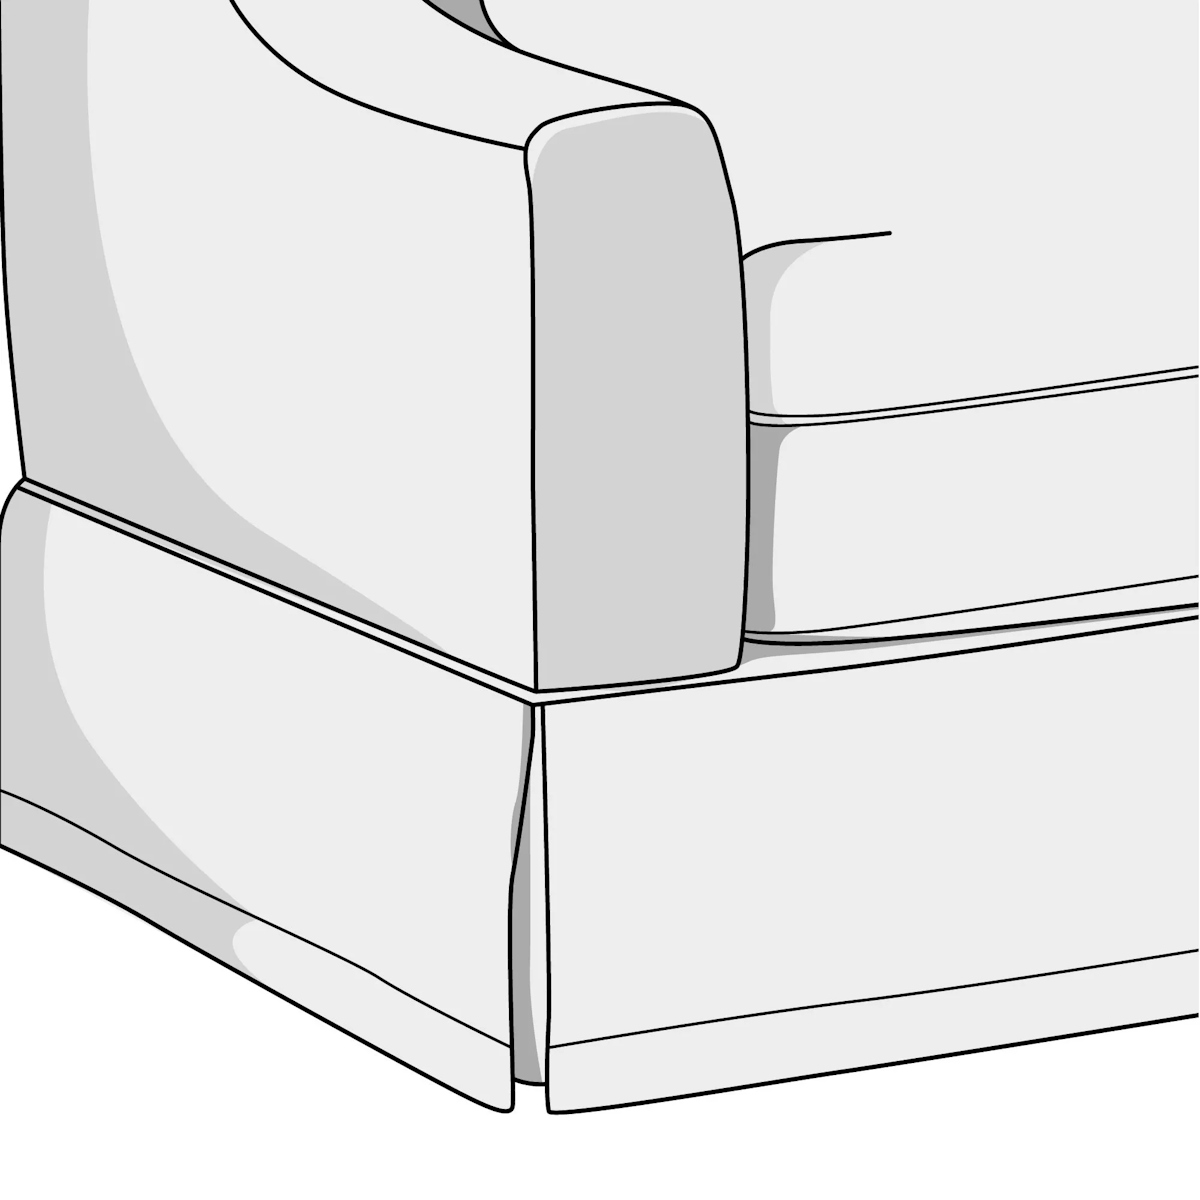 Illustration of skirt style sofa